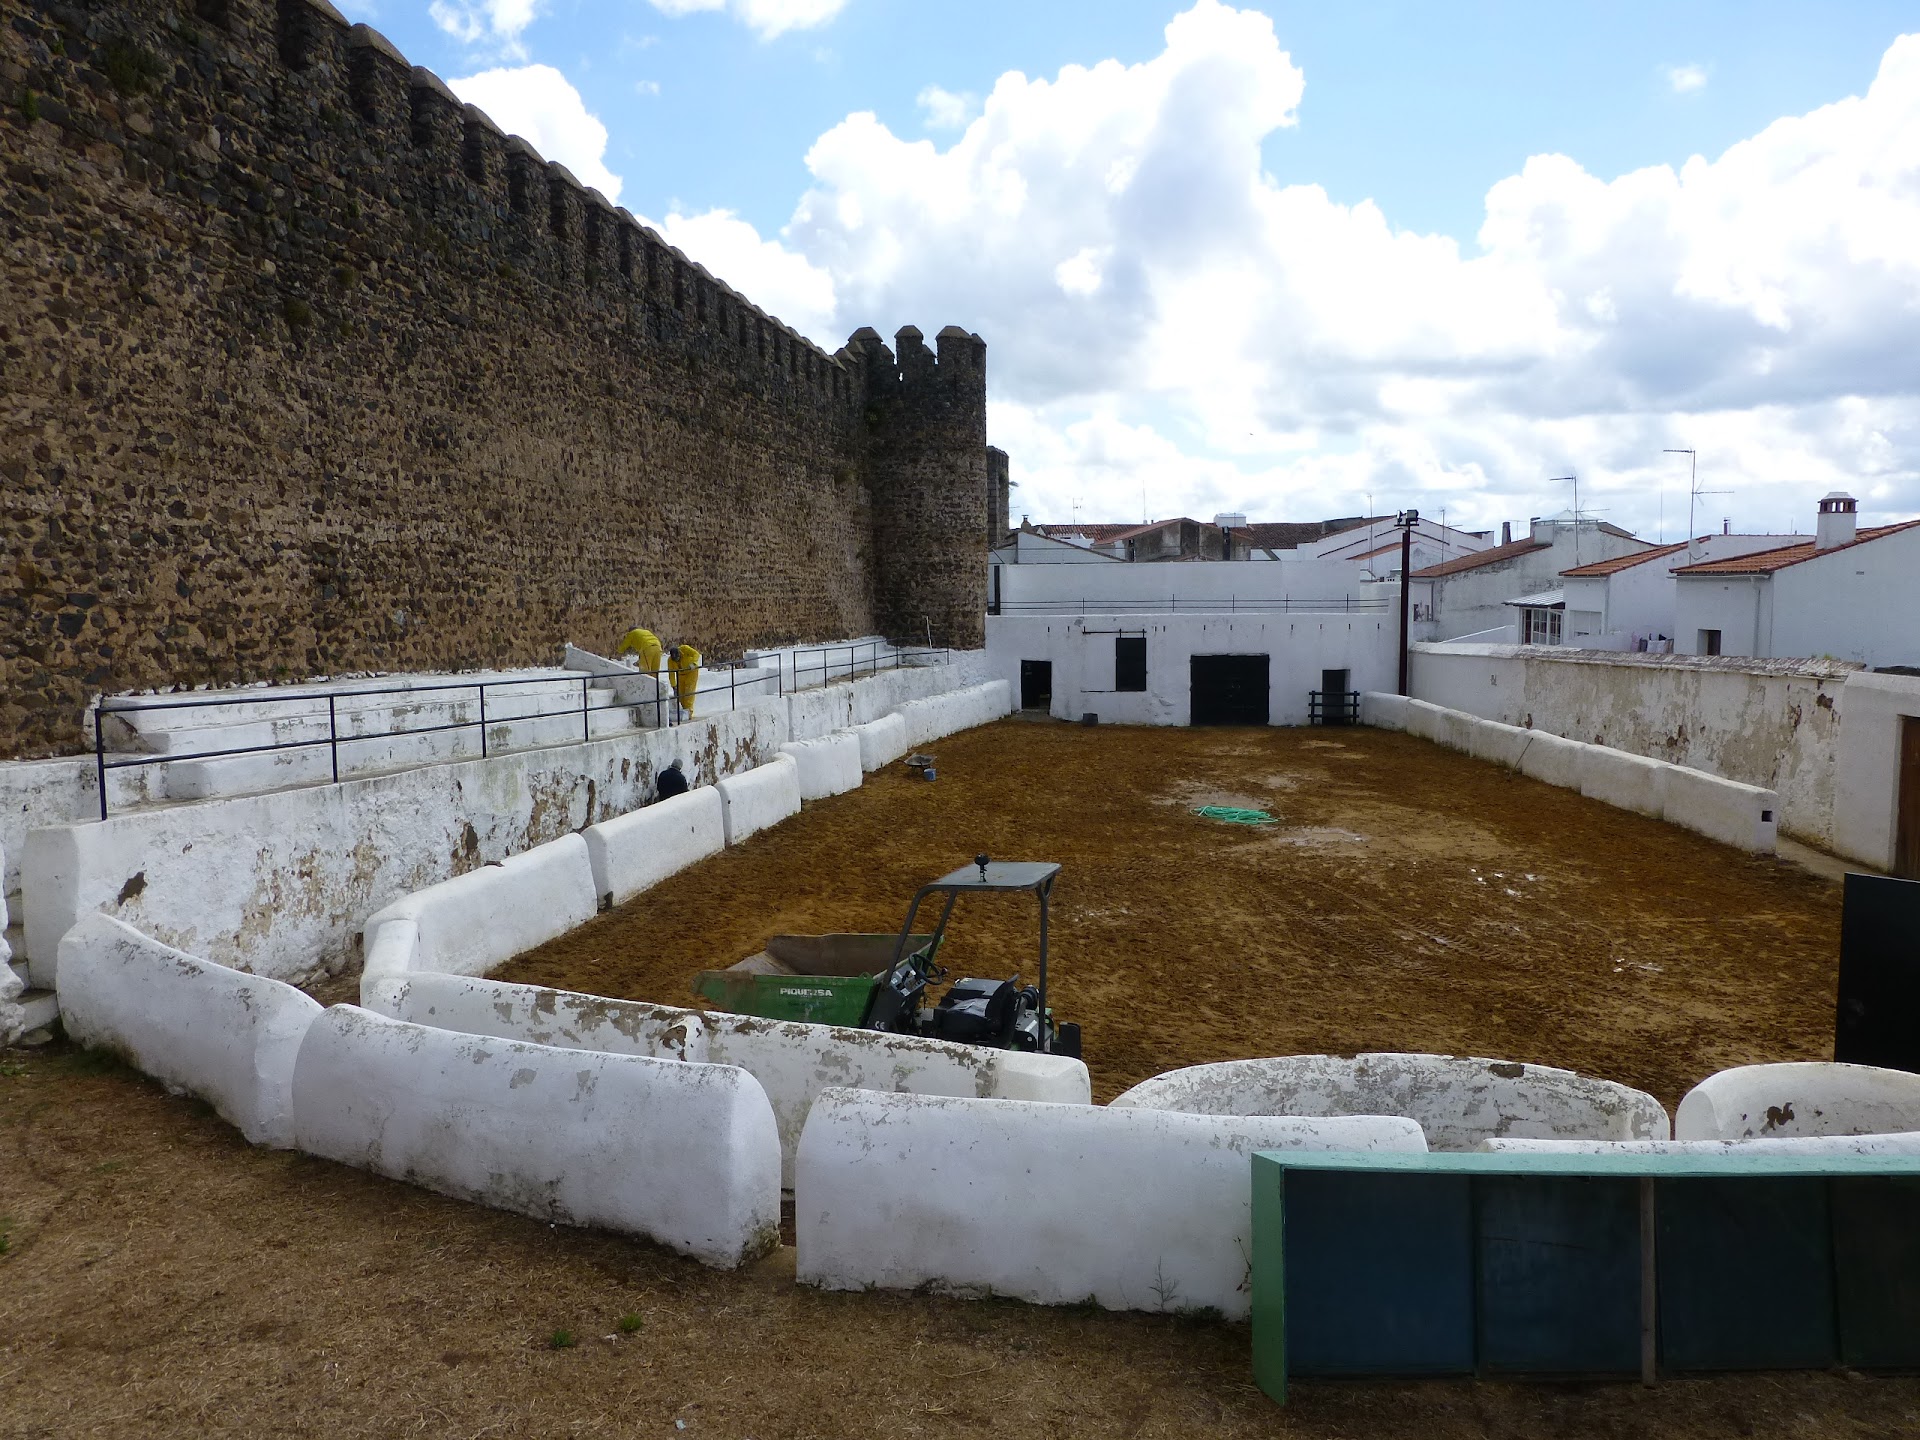 Plaza de Toros de Cumbres Mayores, Huelva - ¿Quién dijo que las plazas de toros eran redondas? - Foro General de Google Earth